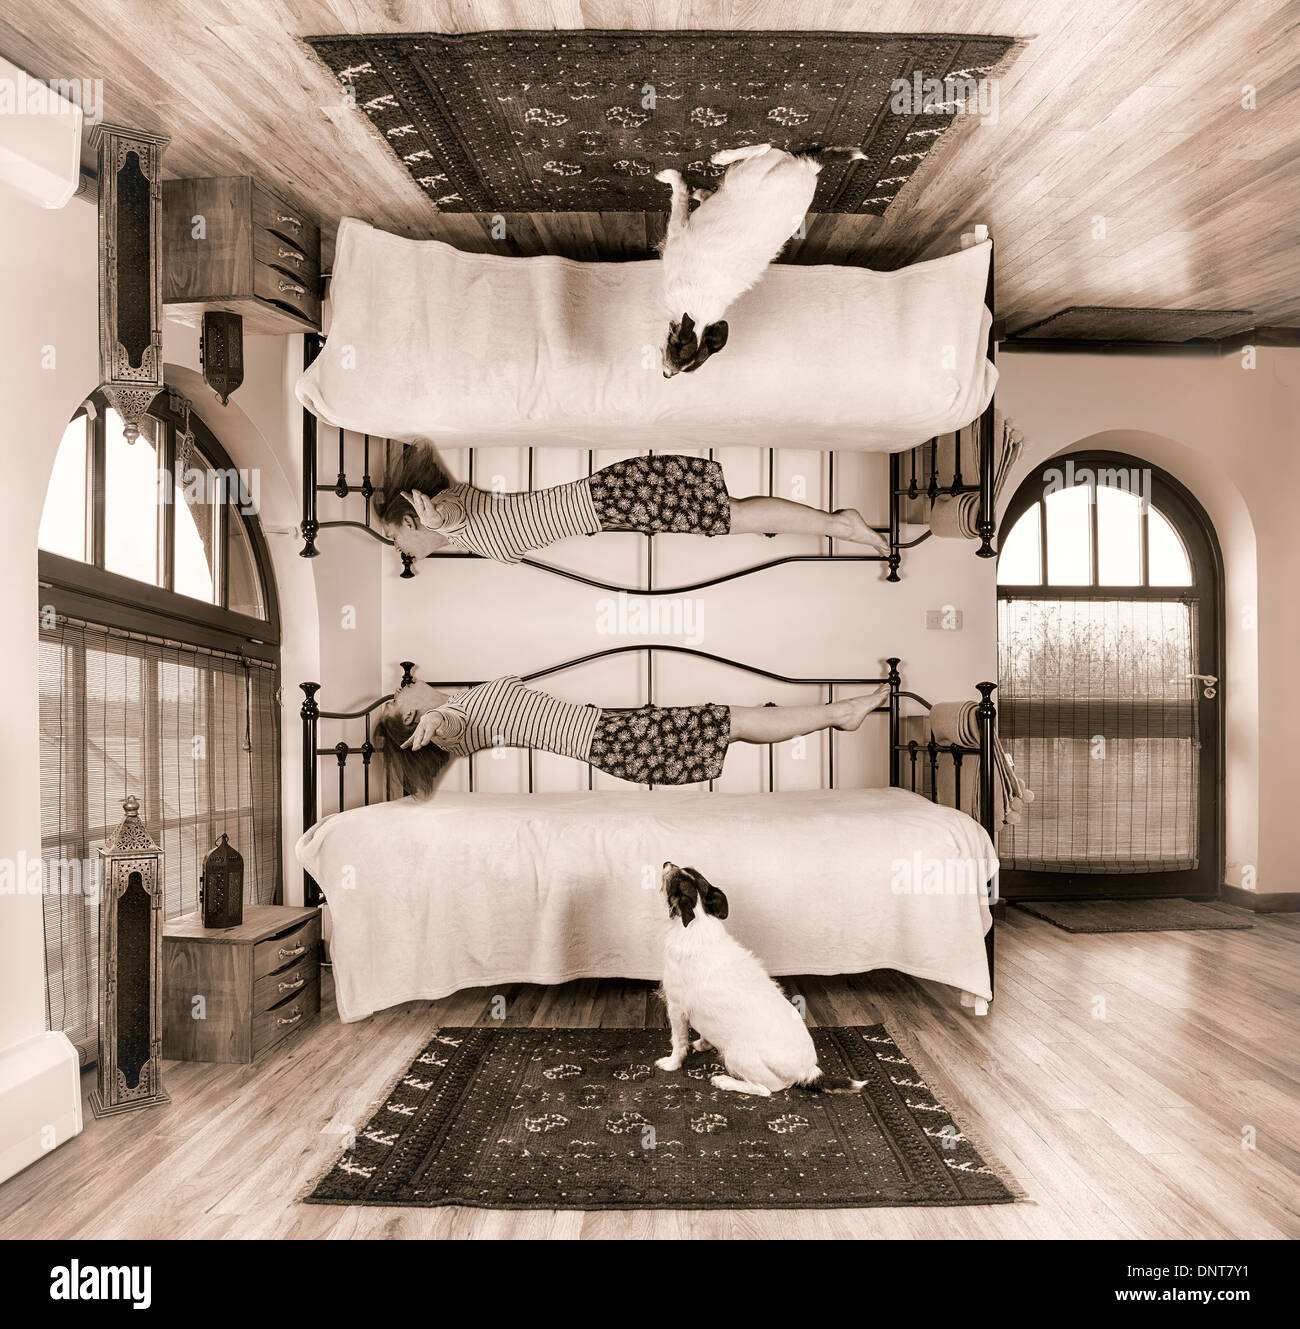 Houzz Tour: 'Interior Surrealism' in a San Francisco Row House